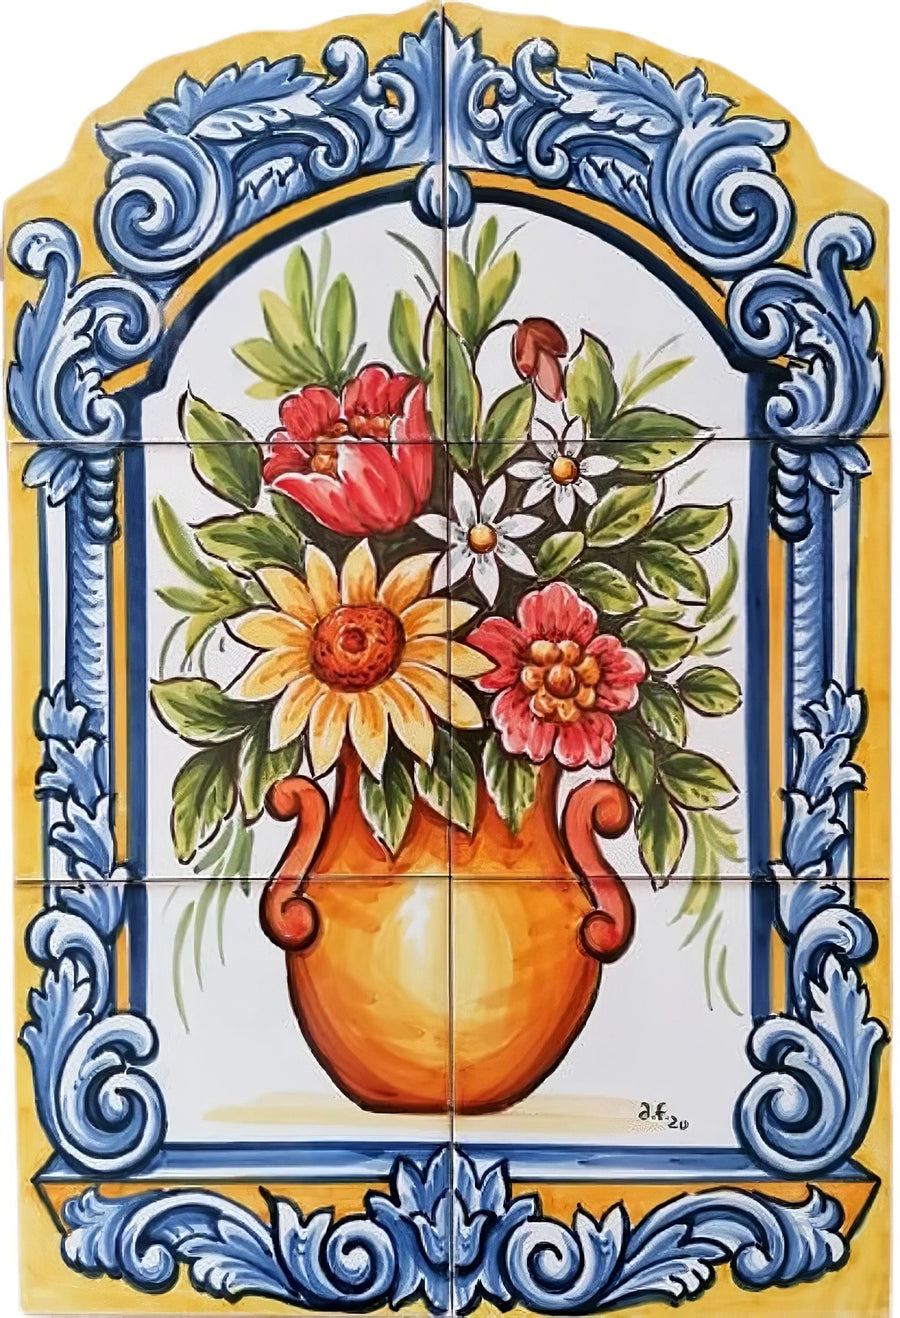 Colourful Flower Vase Tile Mural - Hand Painted Portuguese Tiles | Ref. PT225